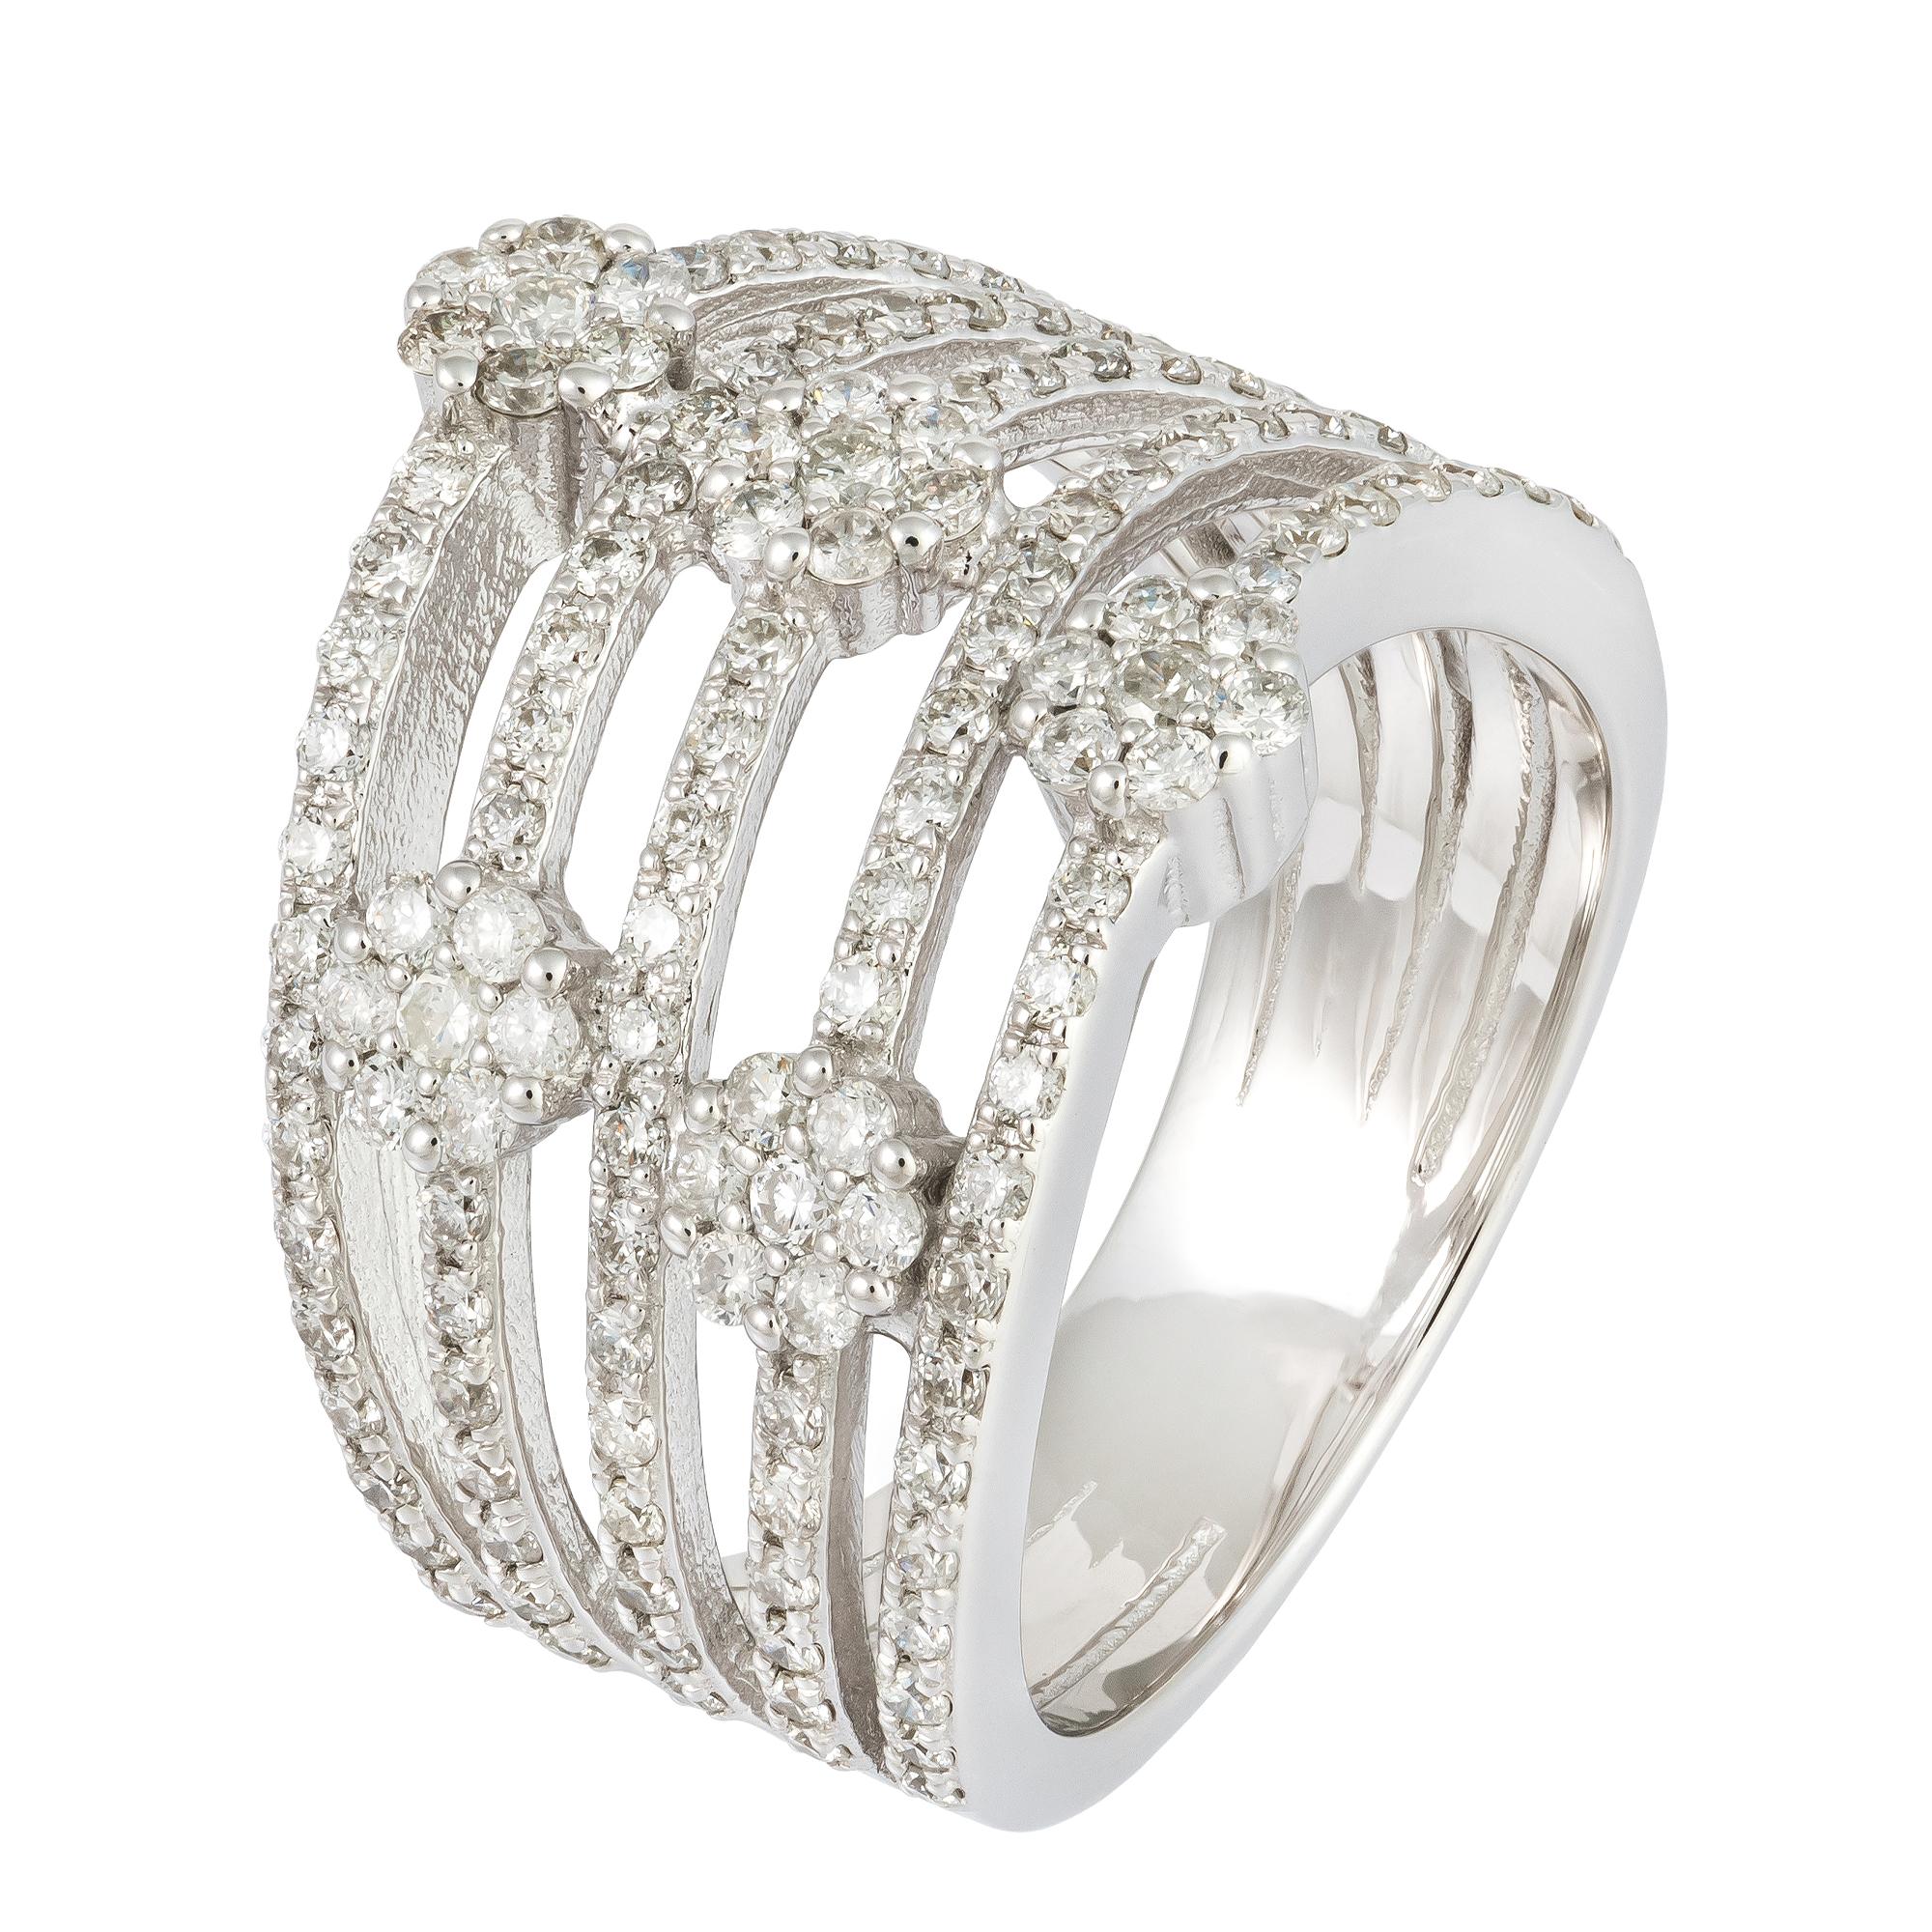 For Sale:  Spectacular White 18K Gold White Diamond Ring For Her 2